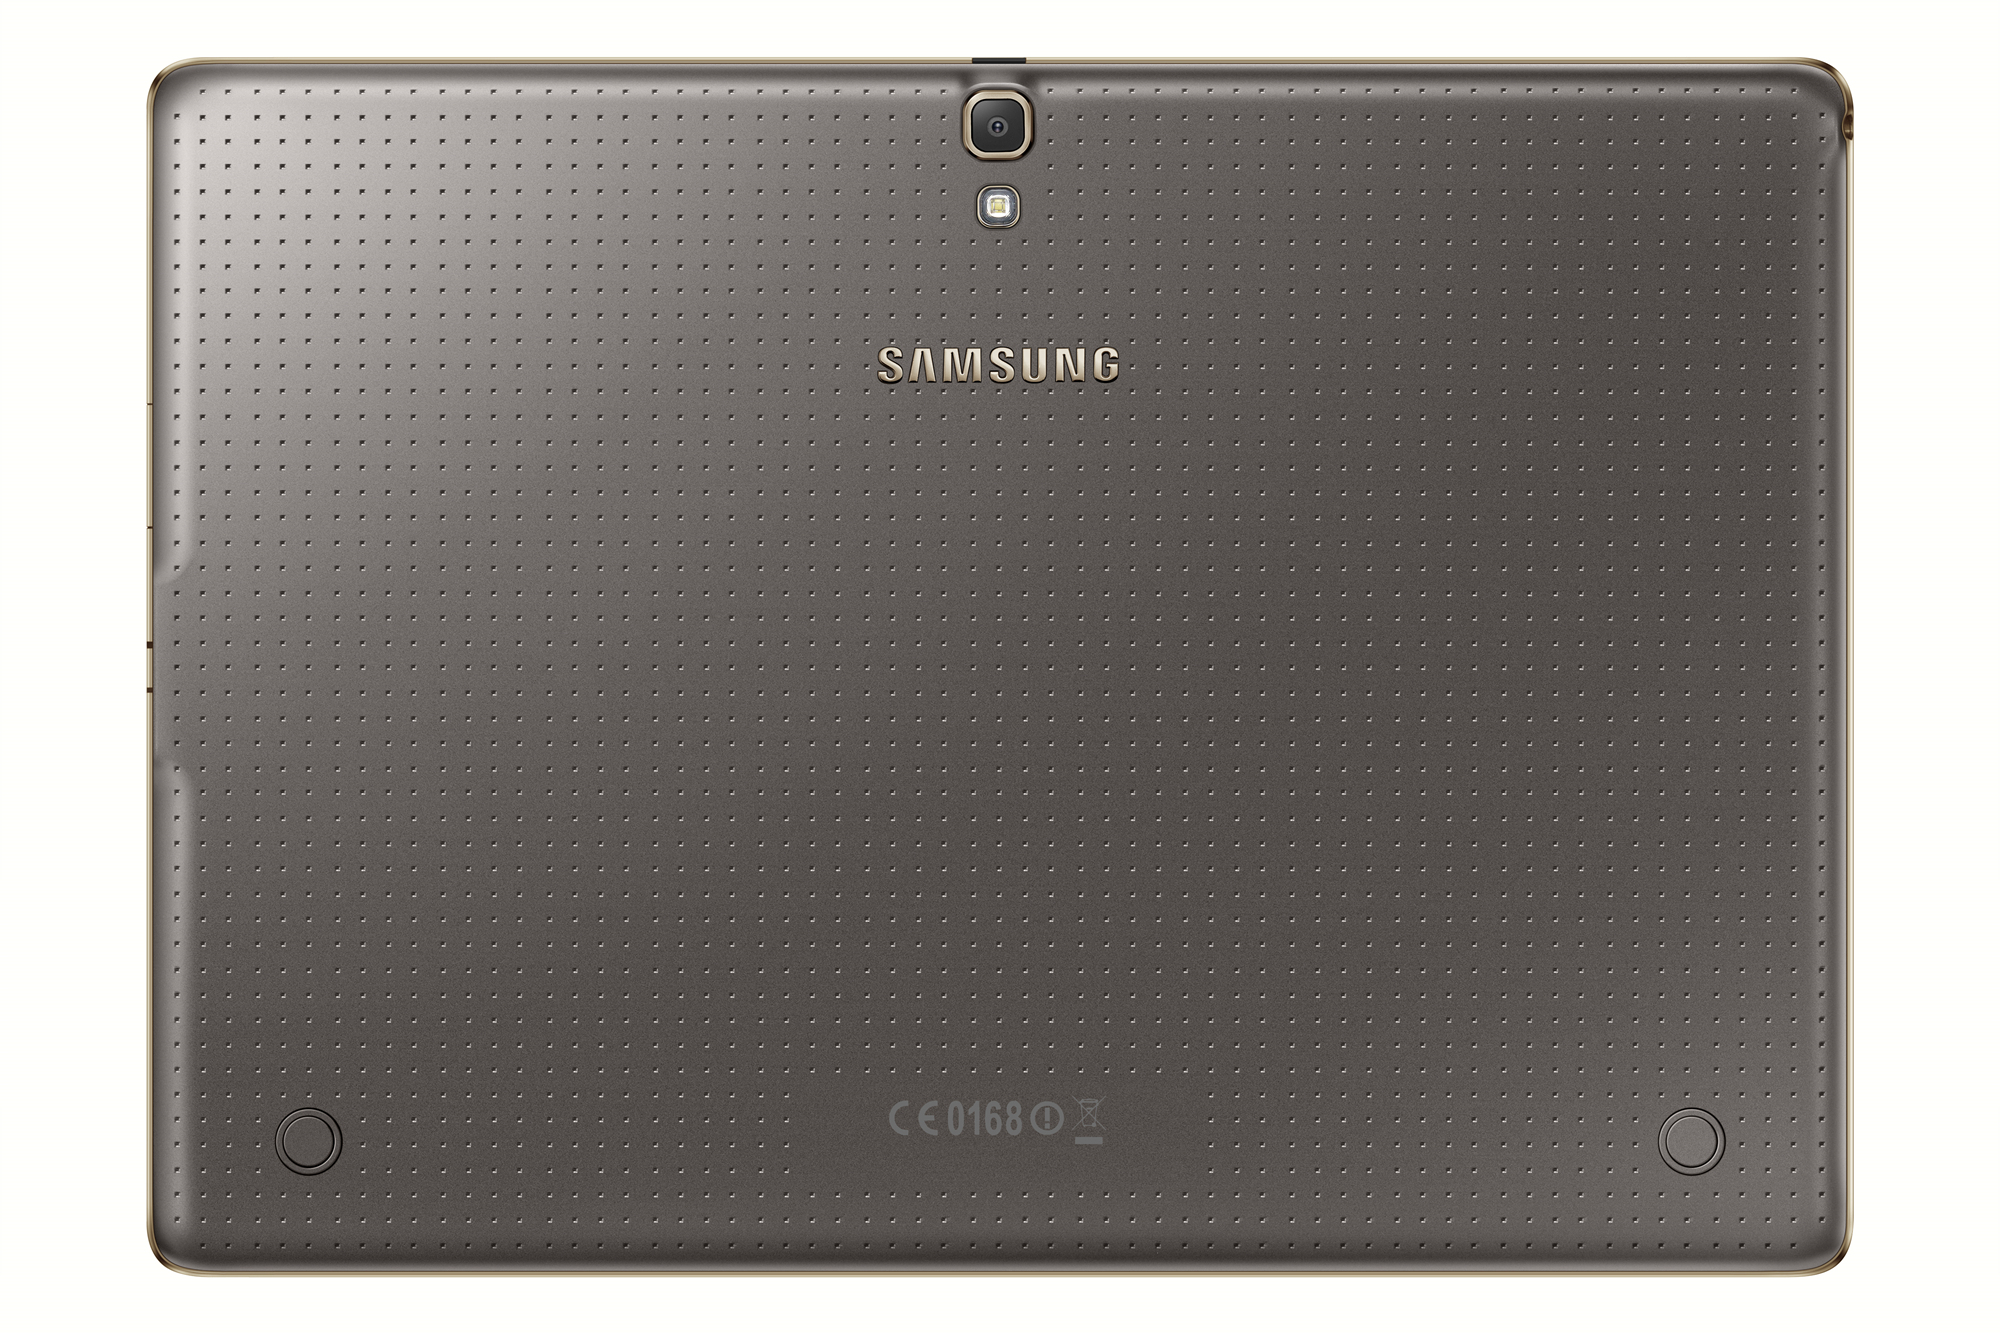 Samsung announces Galaxy Tab S with WQXGA (2560x1600) Super AMOLED